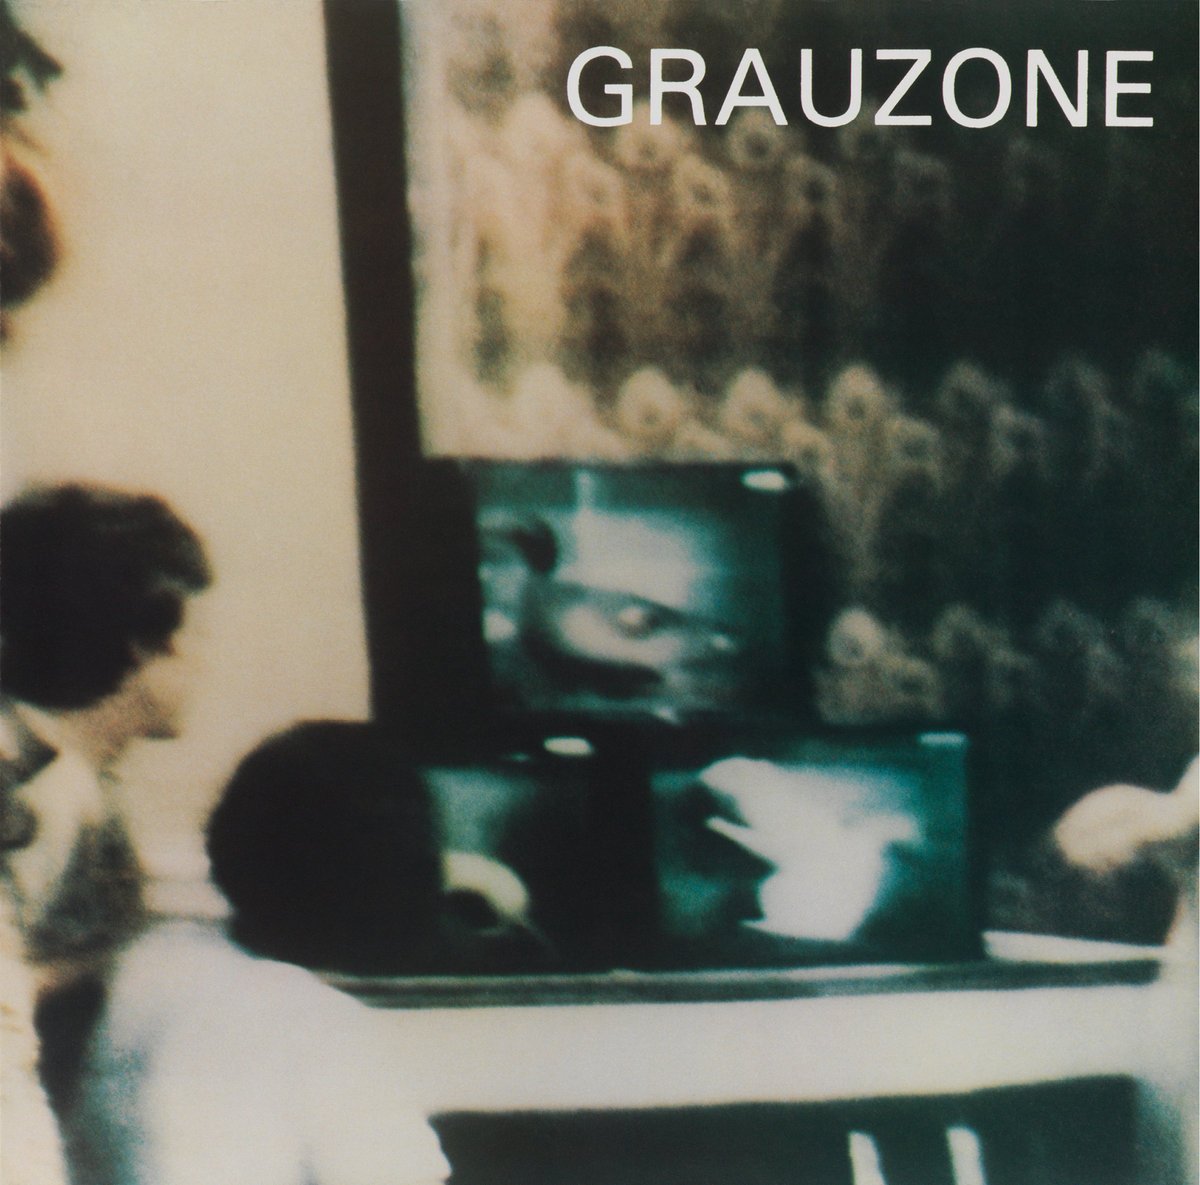 Grauzone-Grauzone-DE-16BIT-WEB-FLAC-1981-ENRiCH